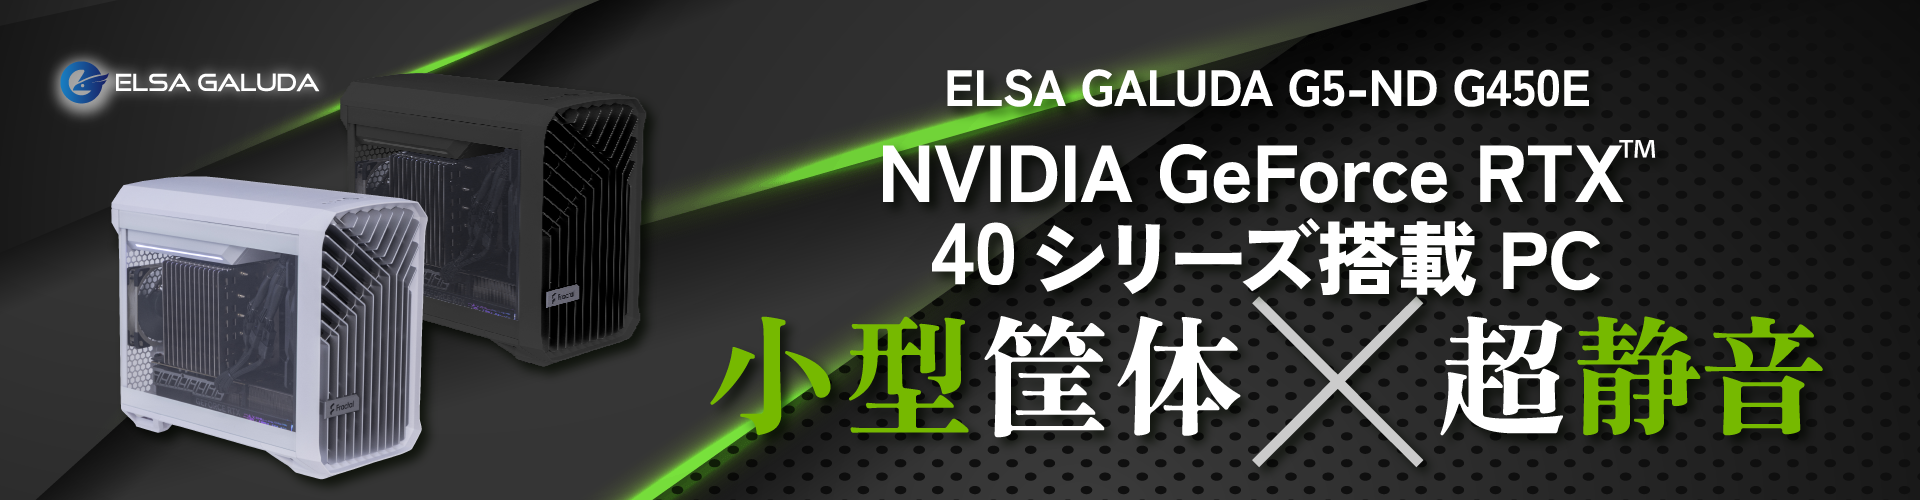 ELSA GALUDA G5-ND G450E